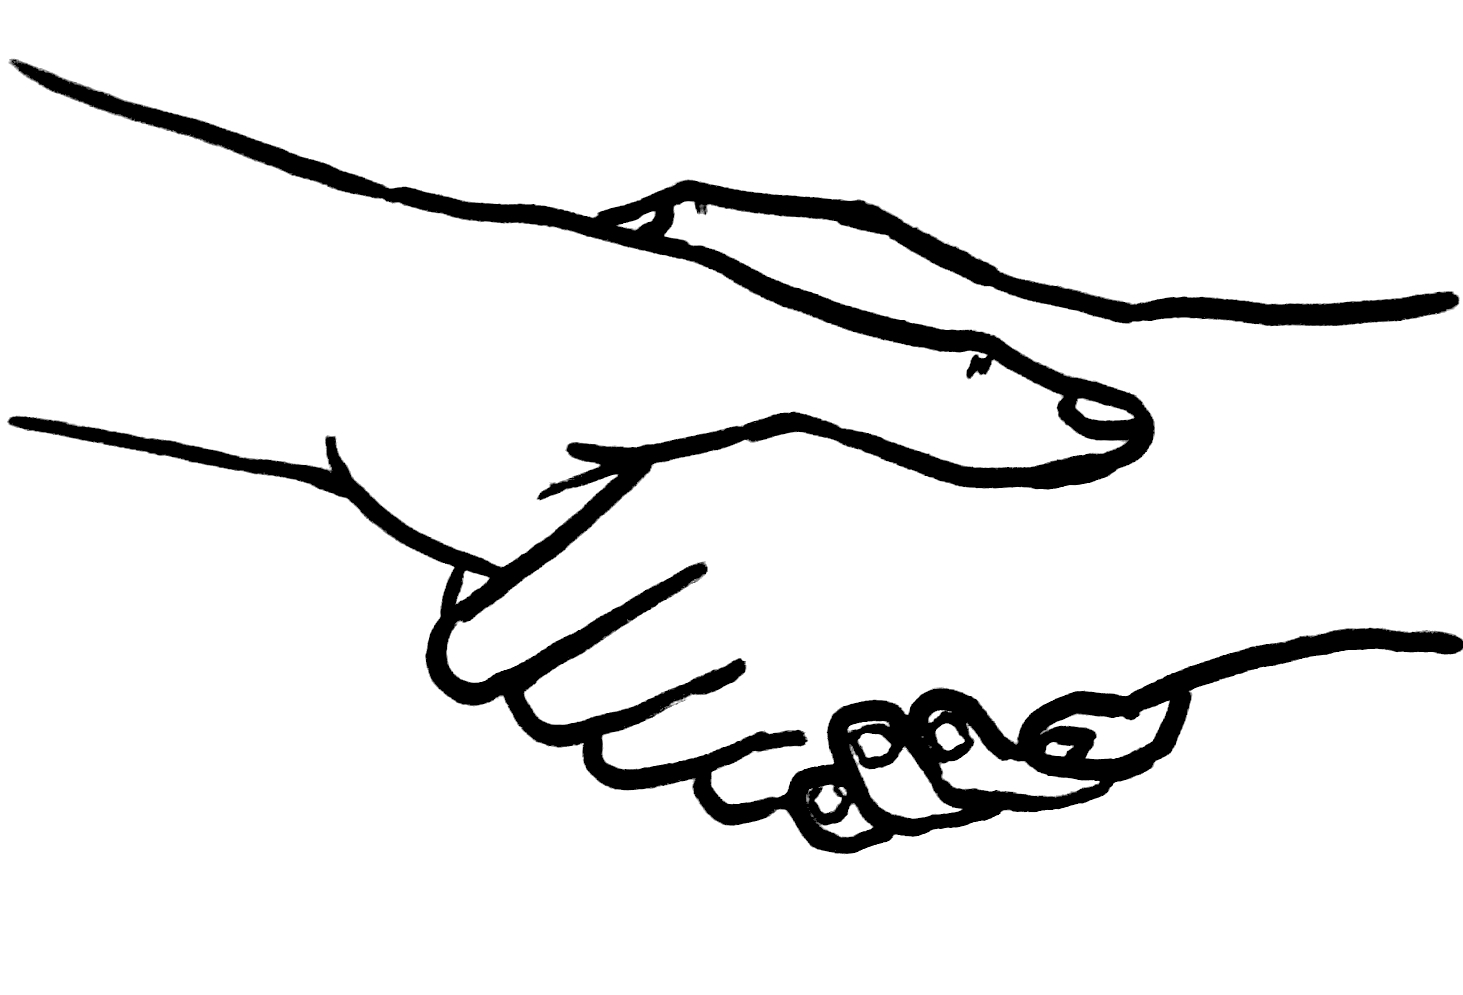 Shaking Hands Logo - ClipArt Best